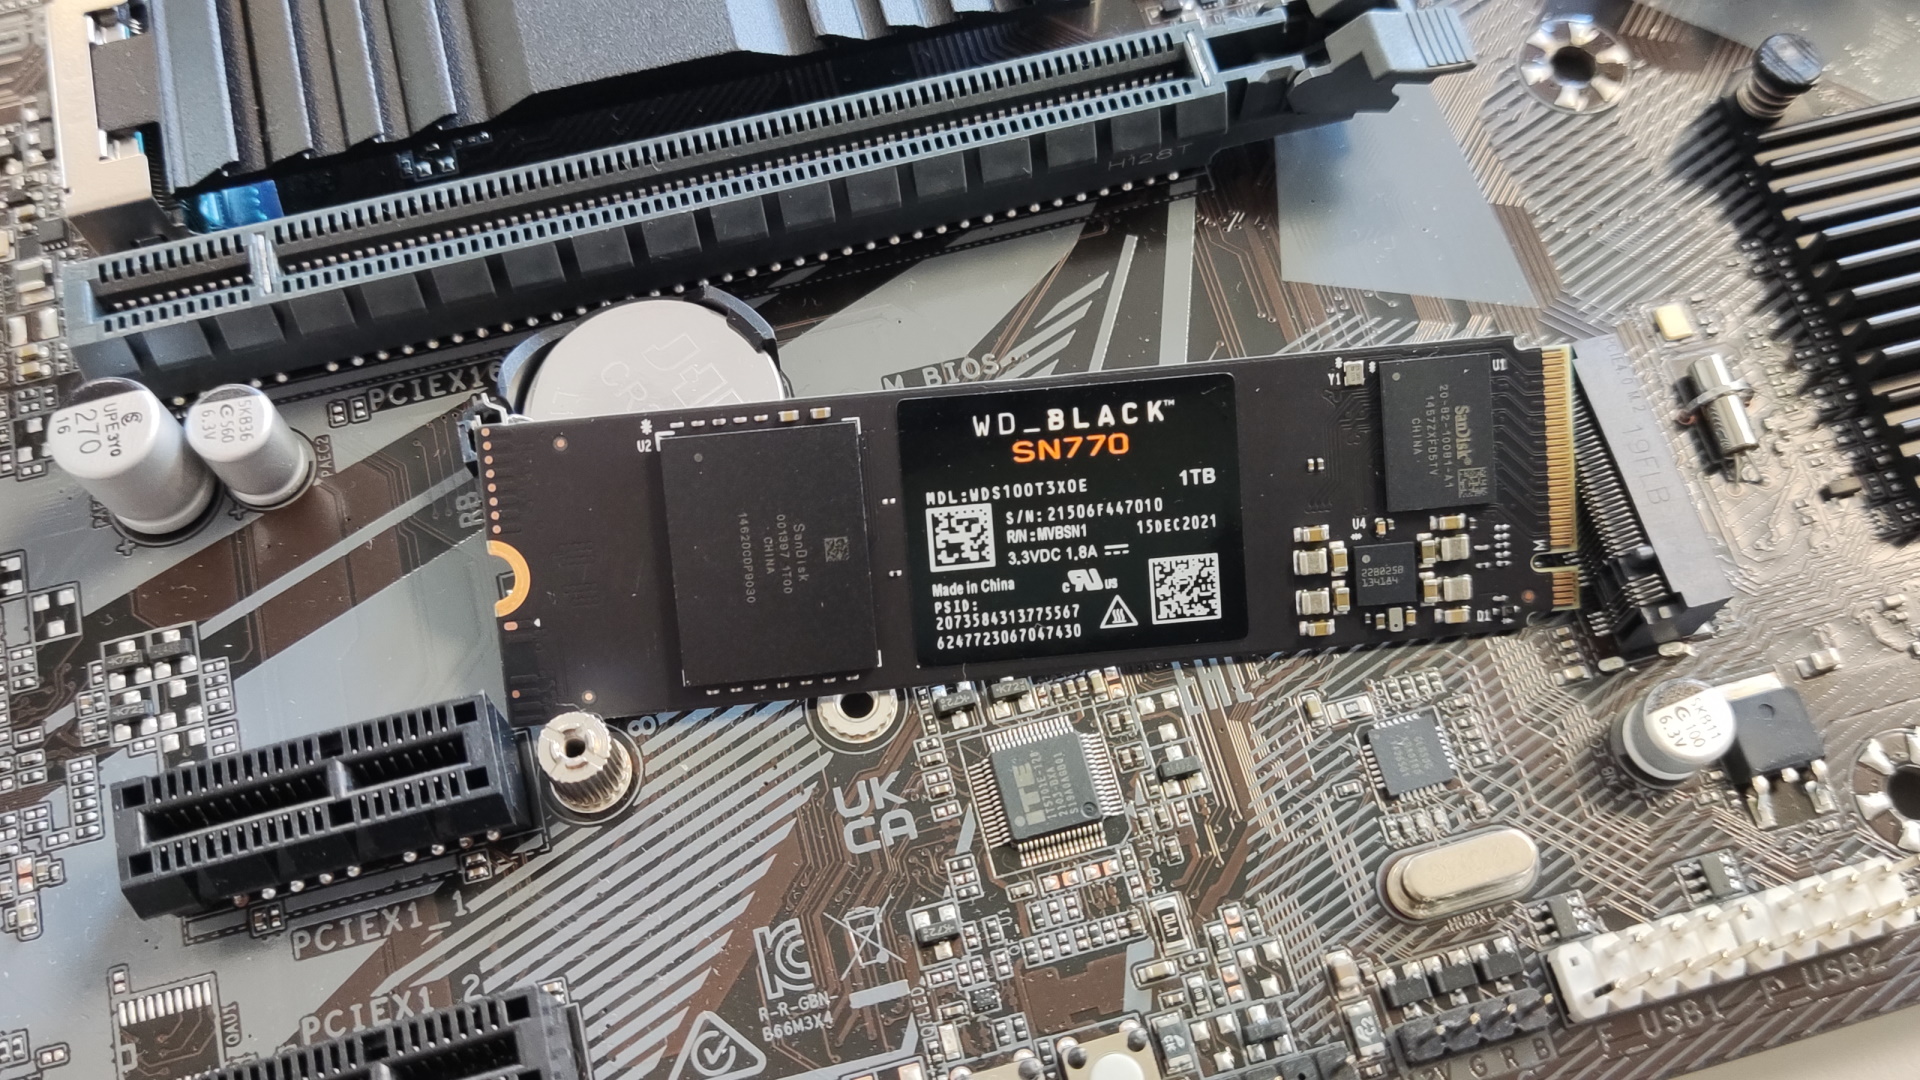 Western Digital WD Black SN770 on a motherboard